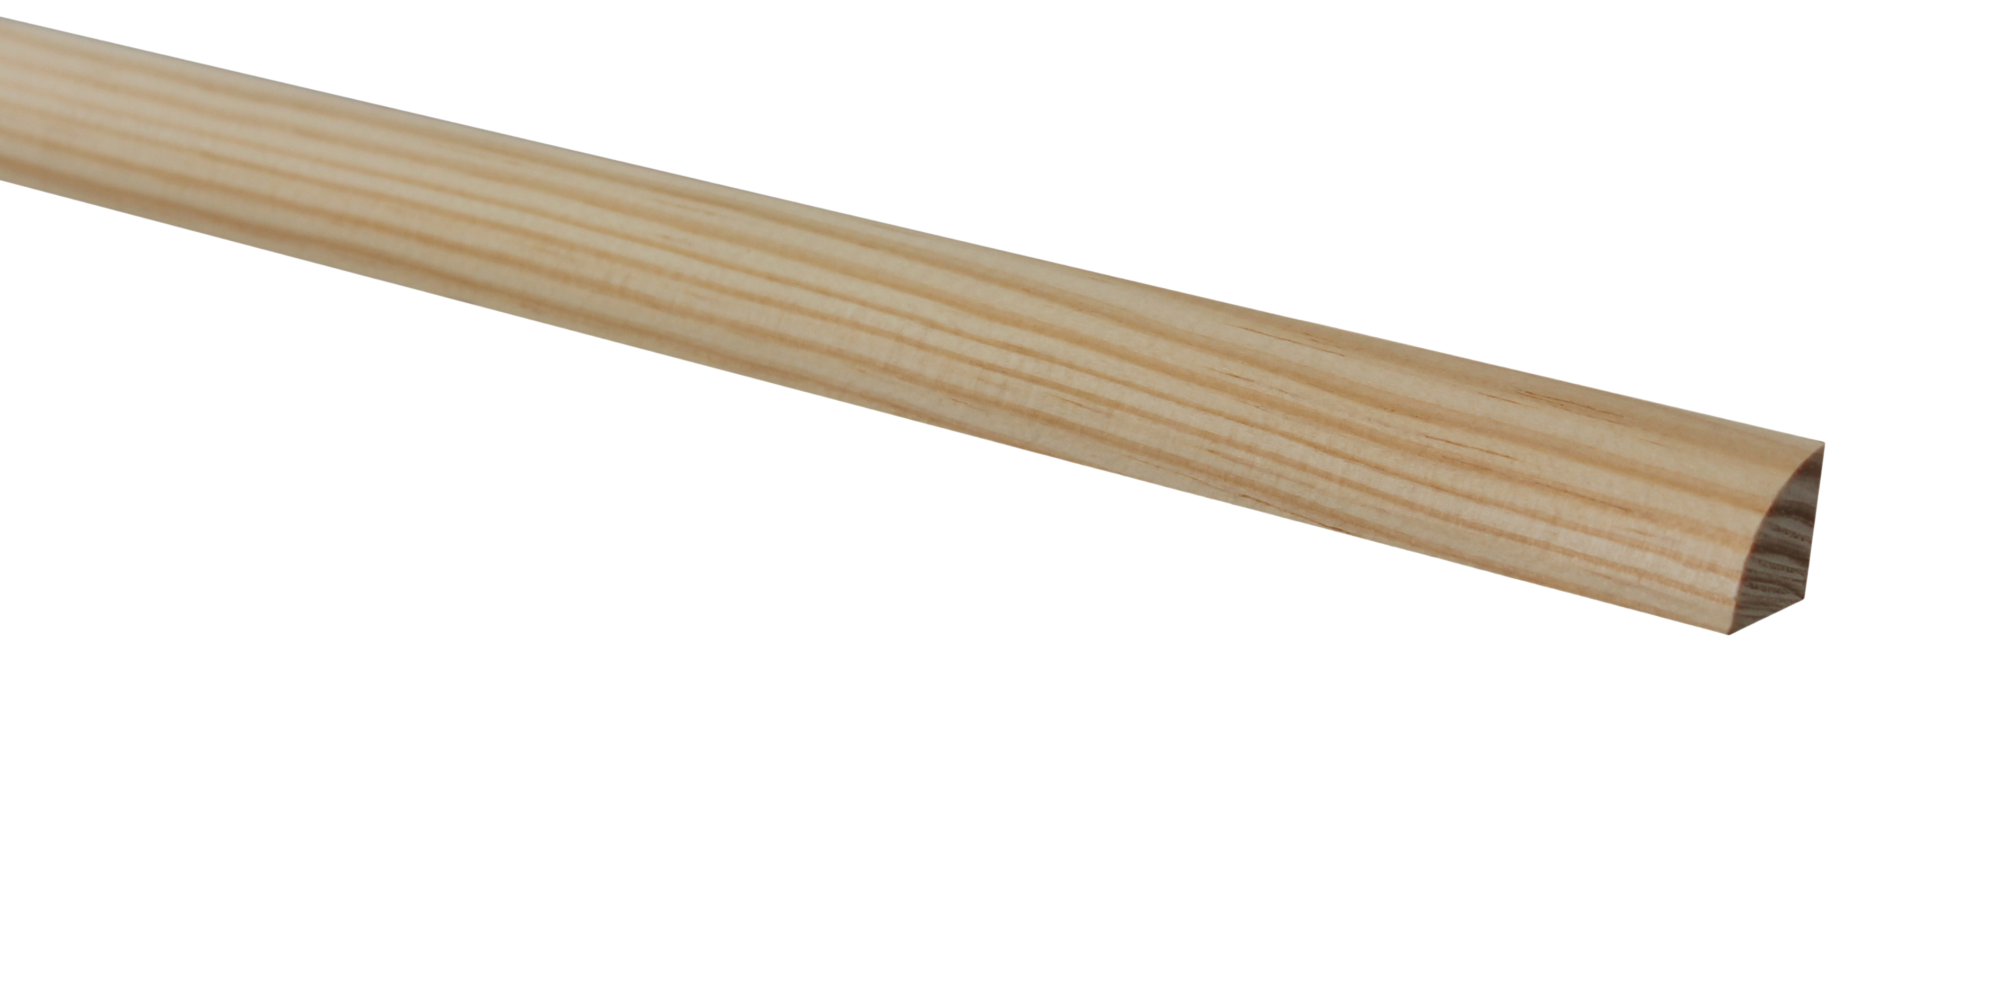 Junquillo de pino 11x11 mm x 2,40 m (ancho x grueso x largo)